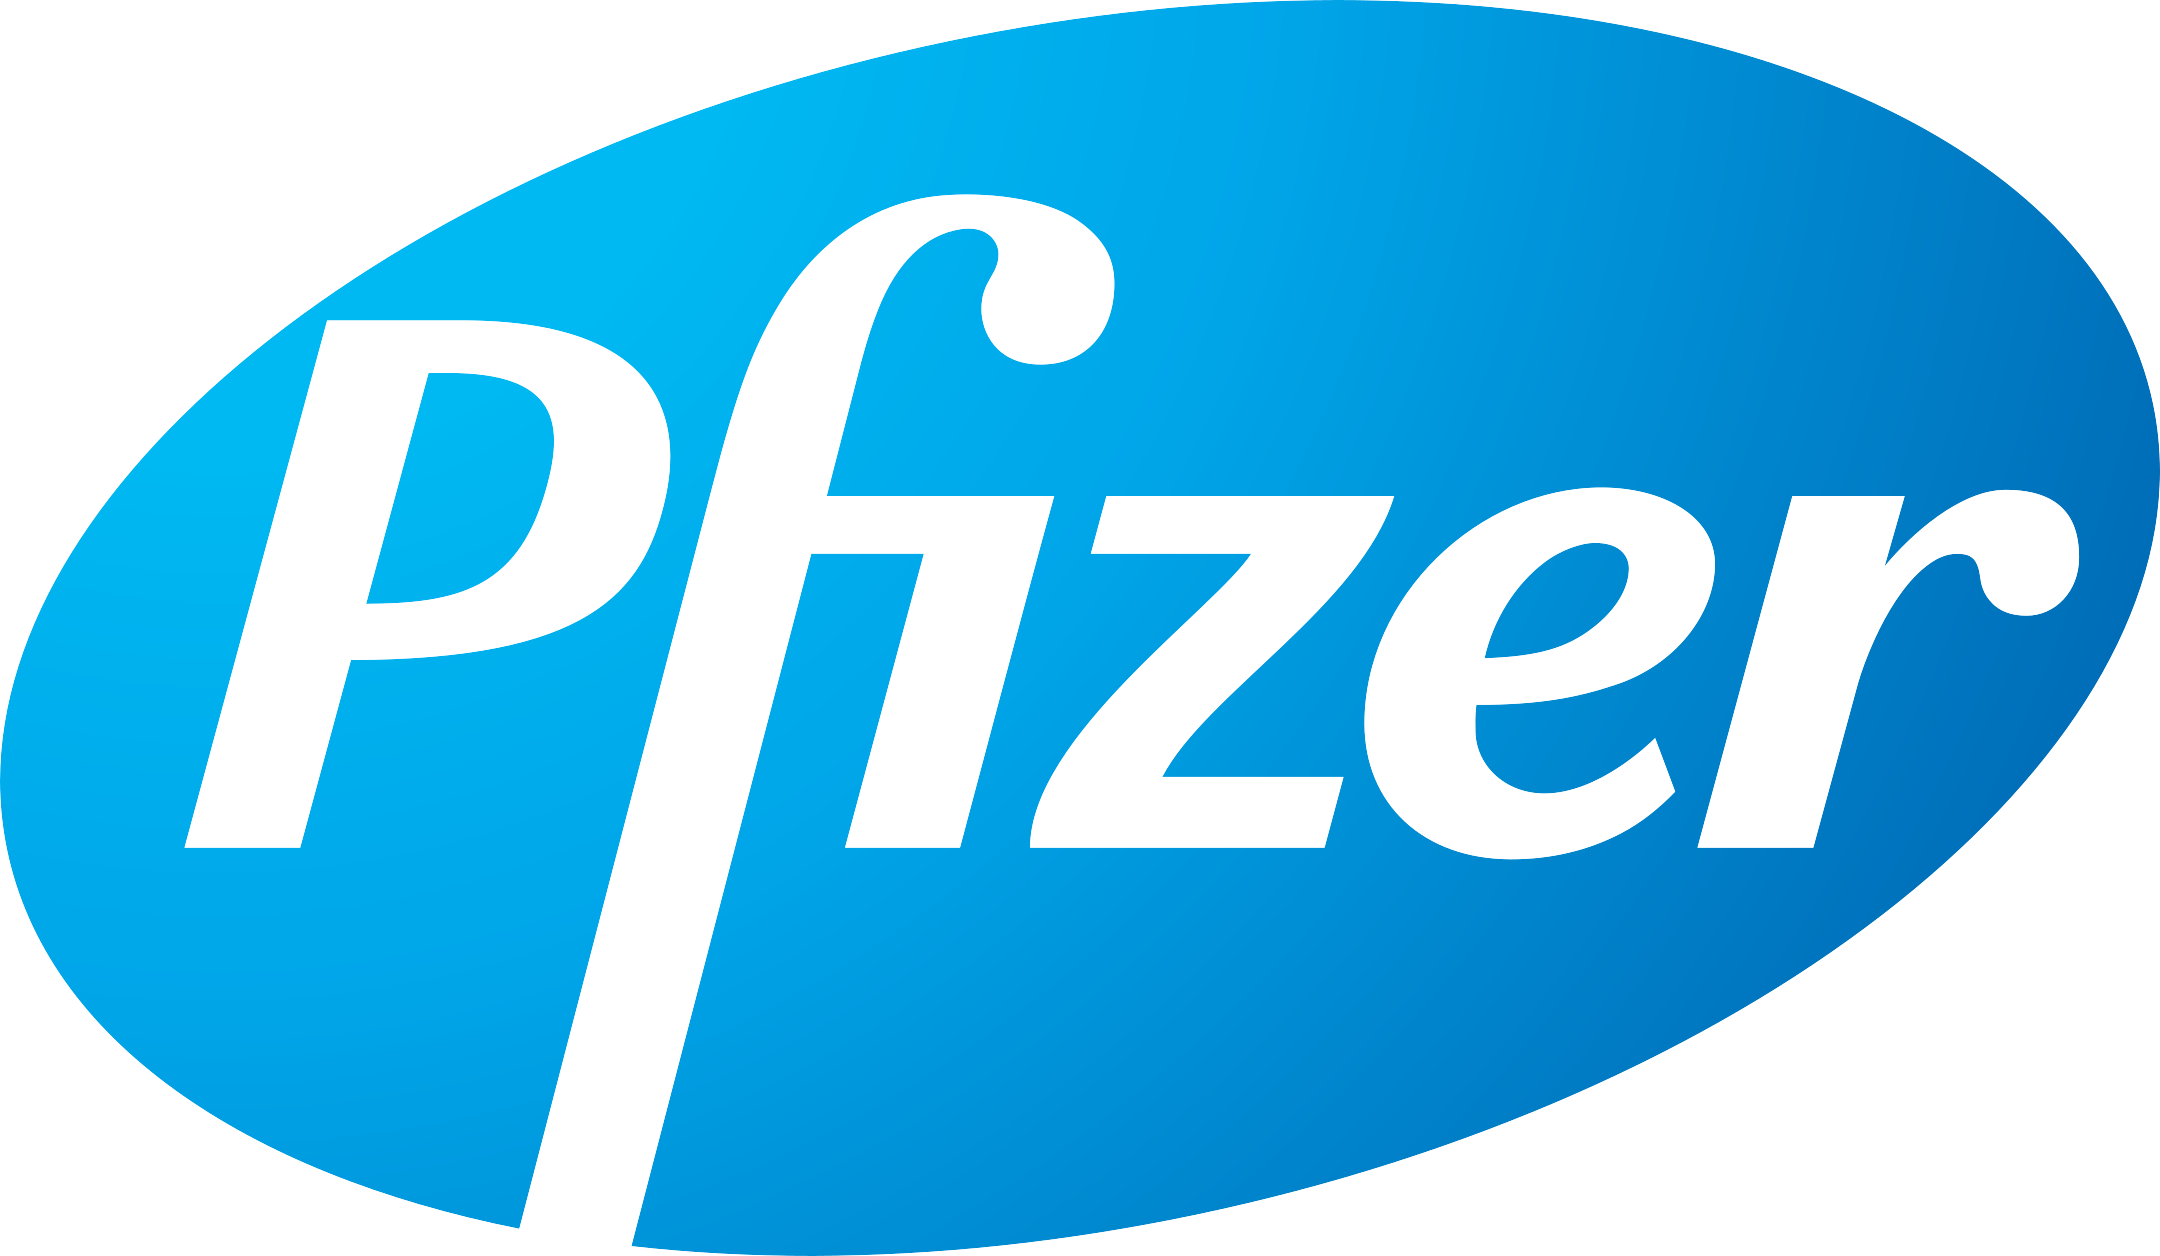 pfizer logo 1 - Pfizer Logo